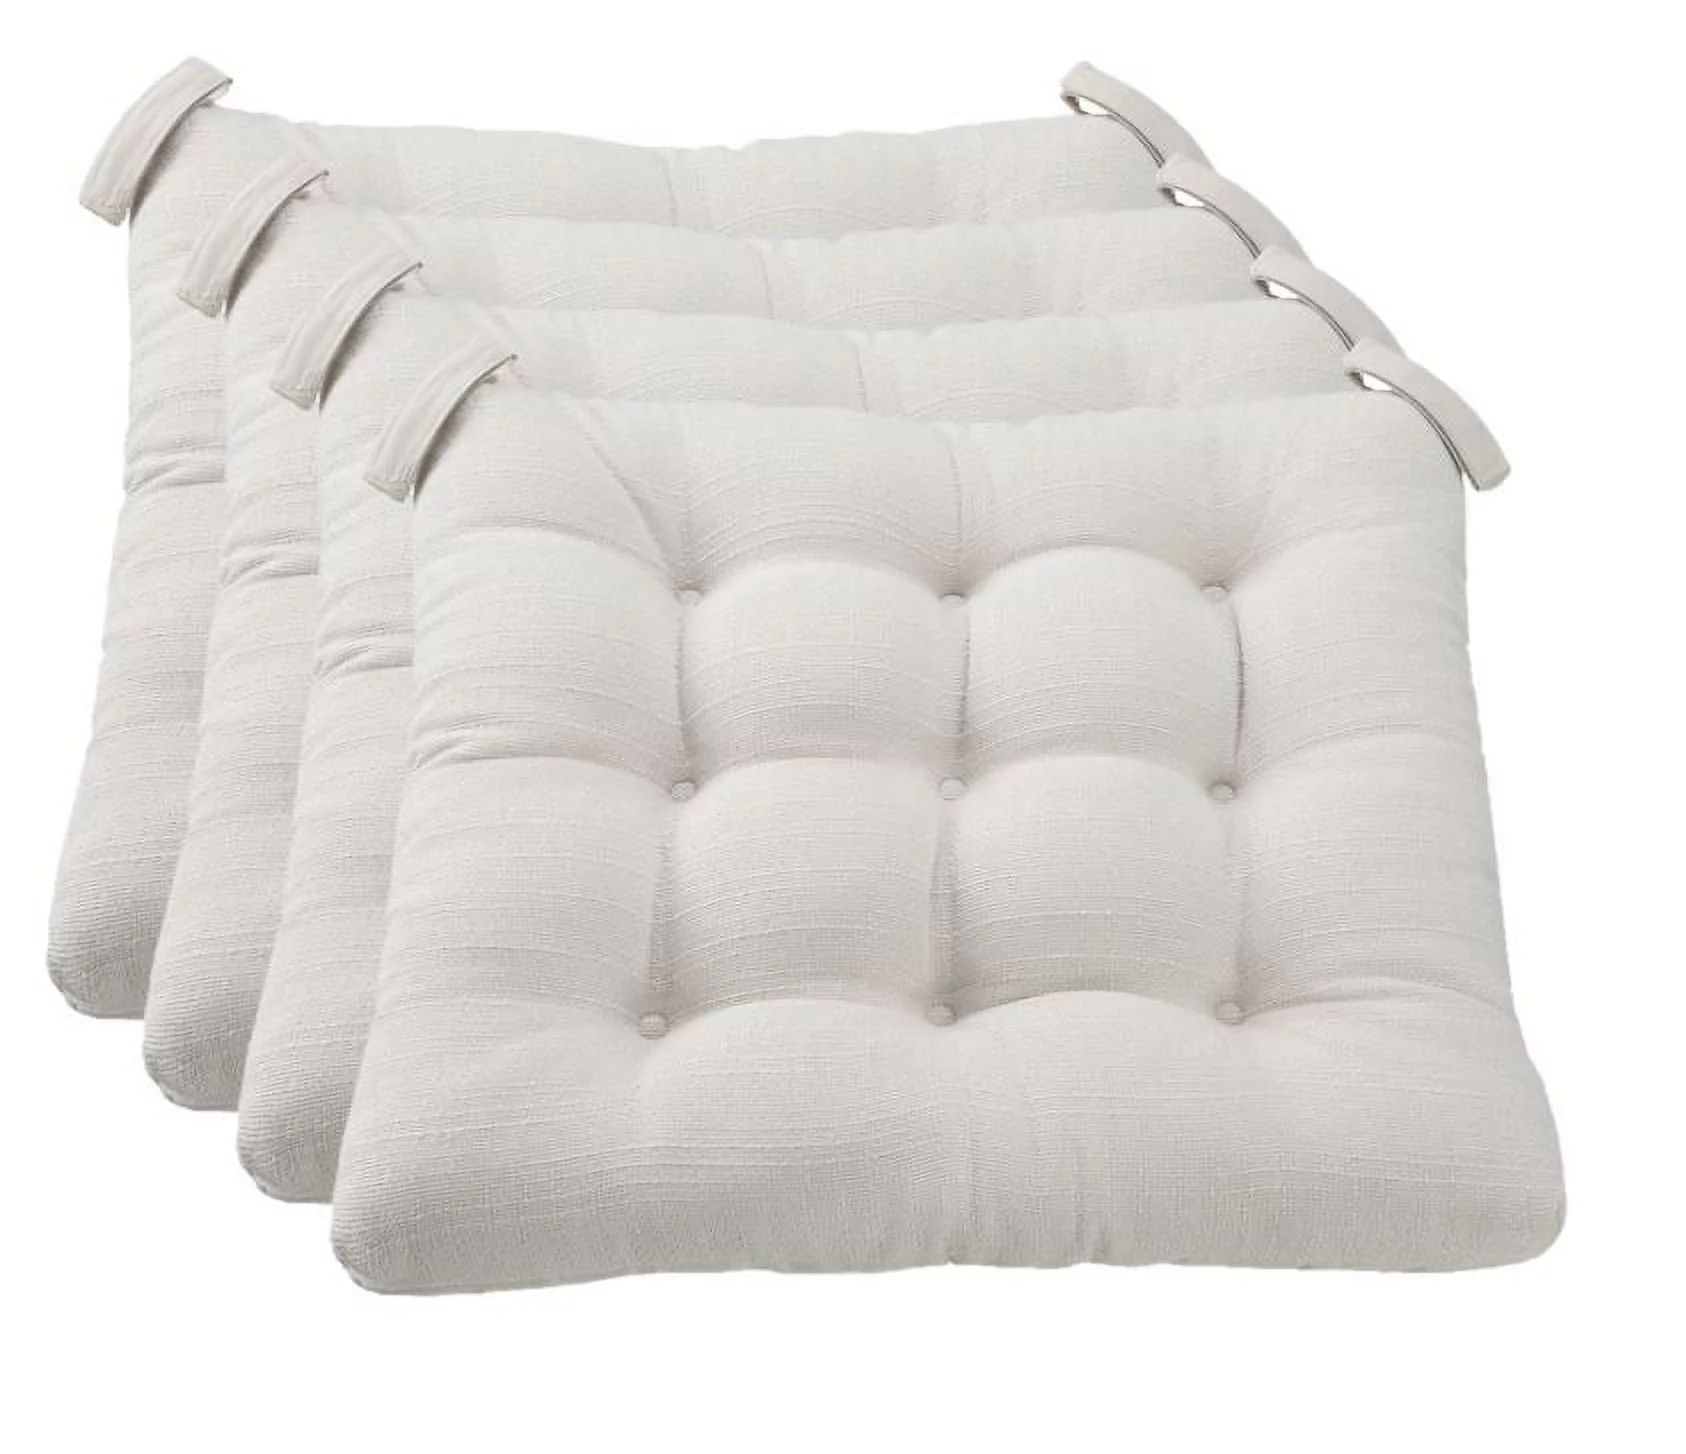 Mainstays Textured Chair Seat Pad (Chair Cushion), Silver Color, 4-Piece Set, 15.5" L x 16" W | Walmart (US)